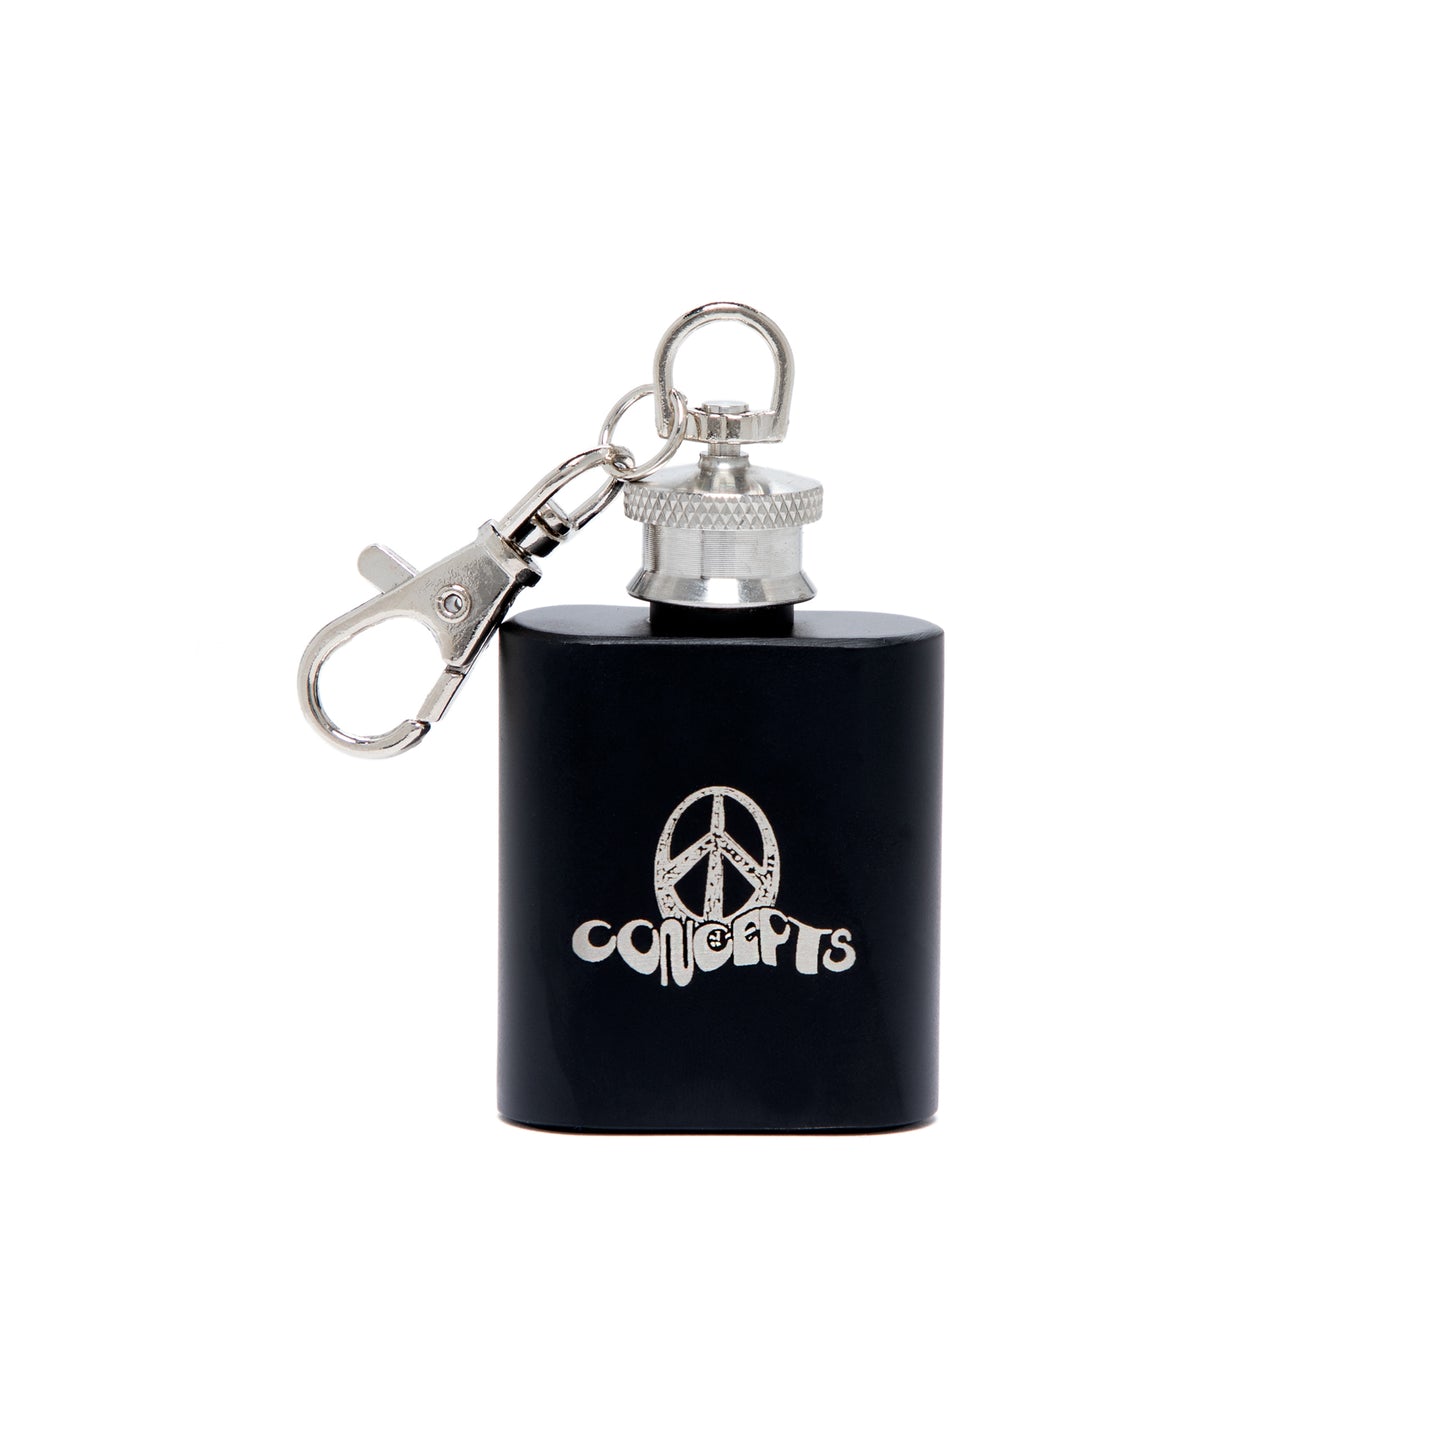 Concepts Mini Flask Key Chain (Black)